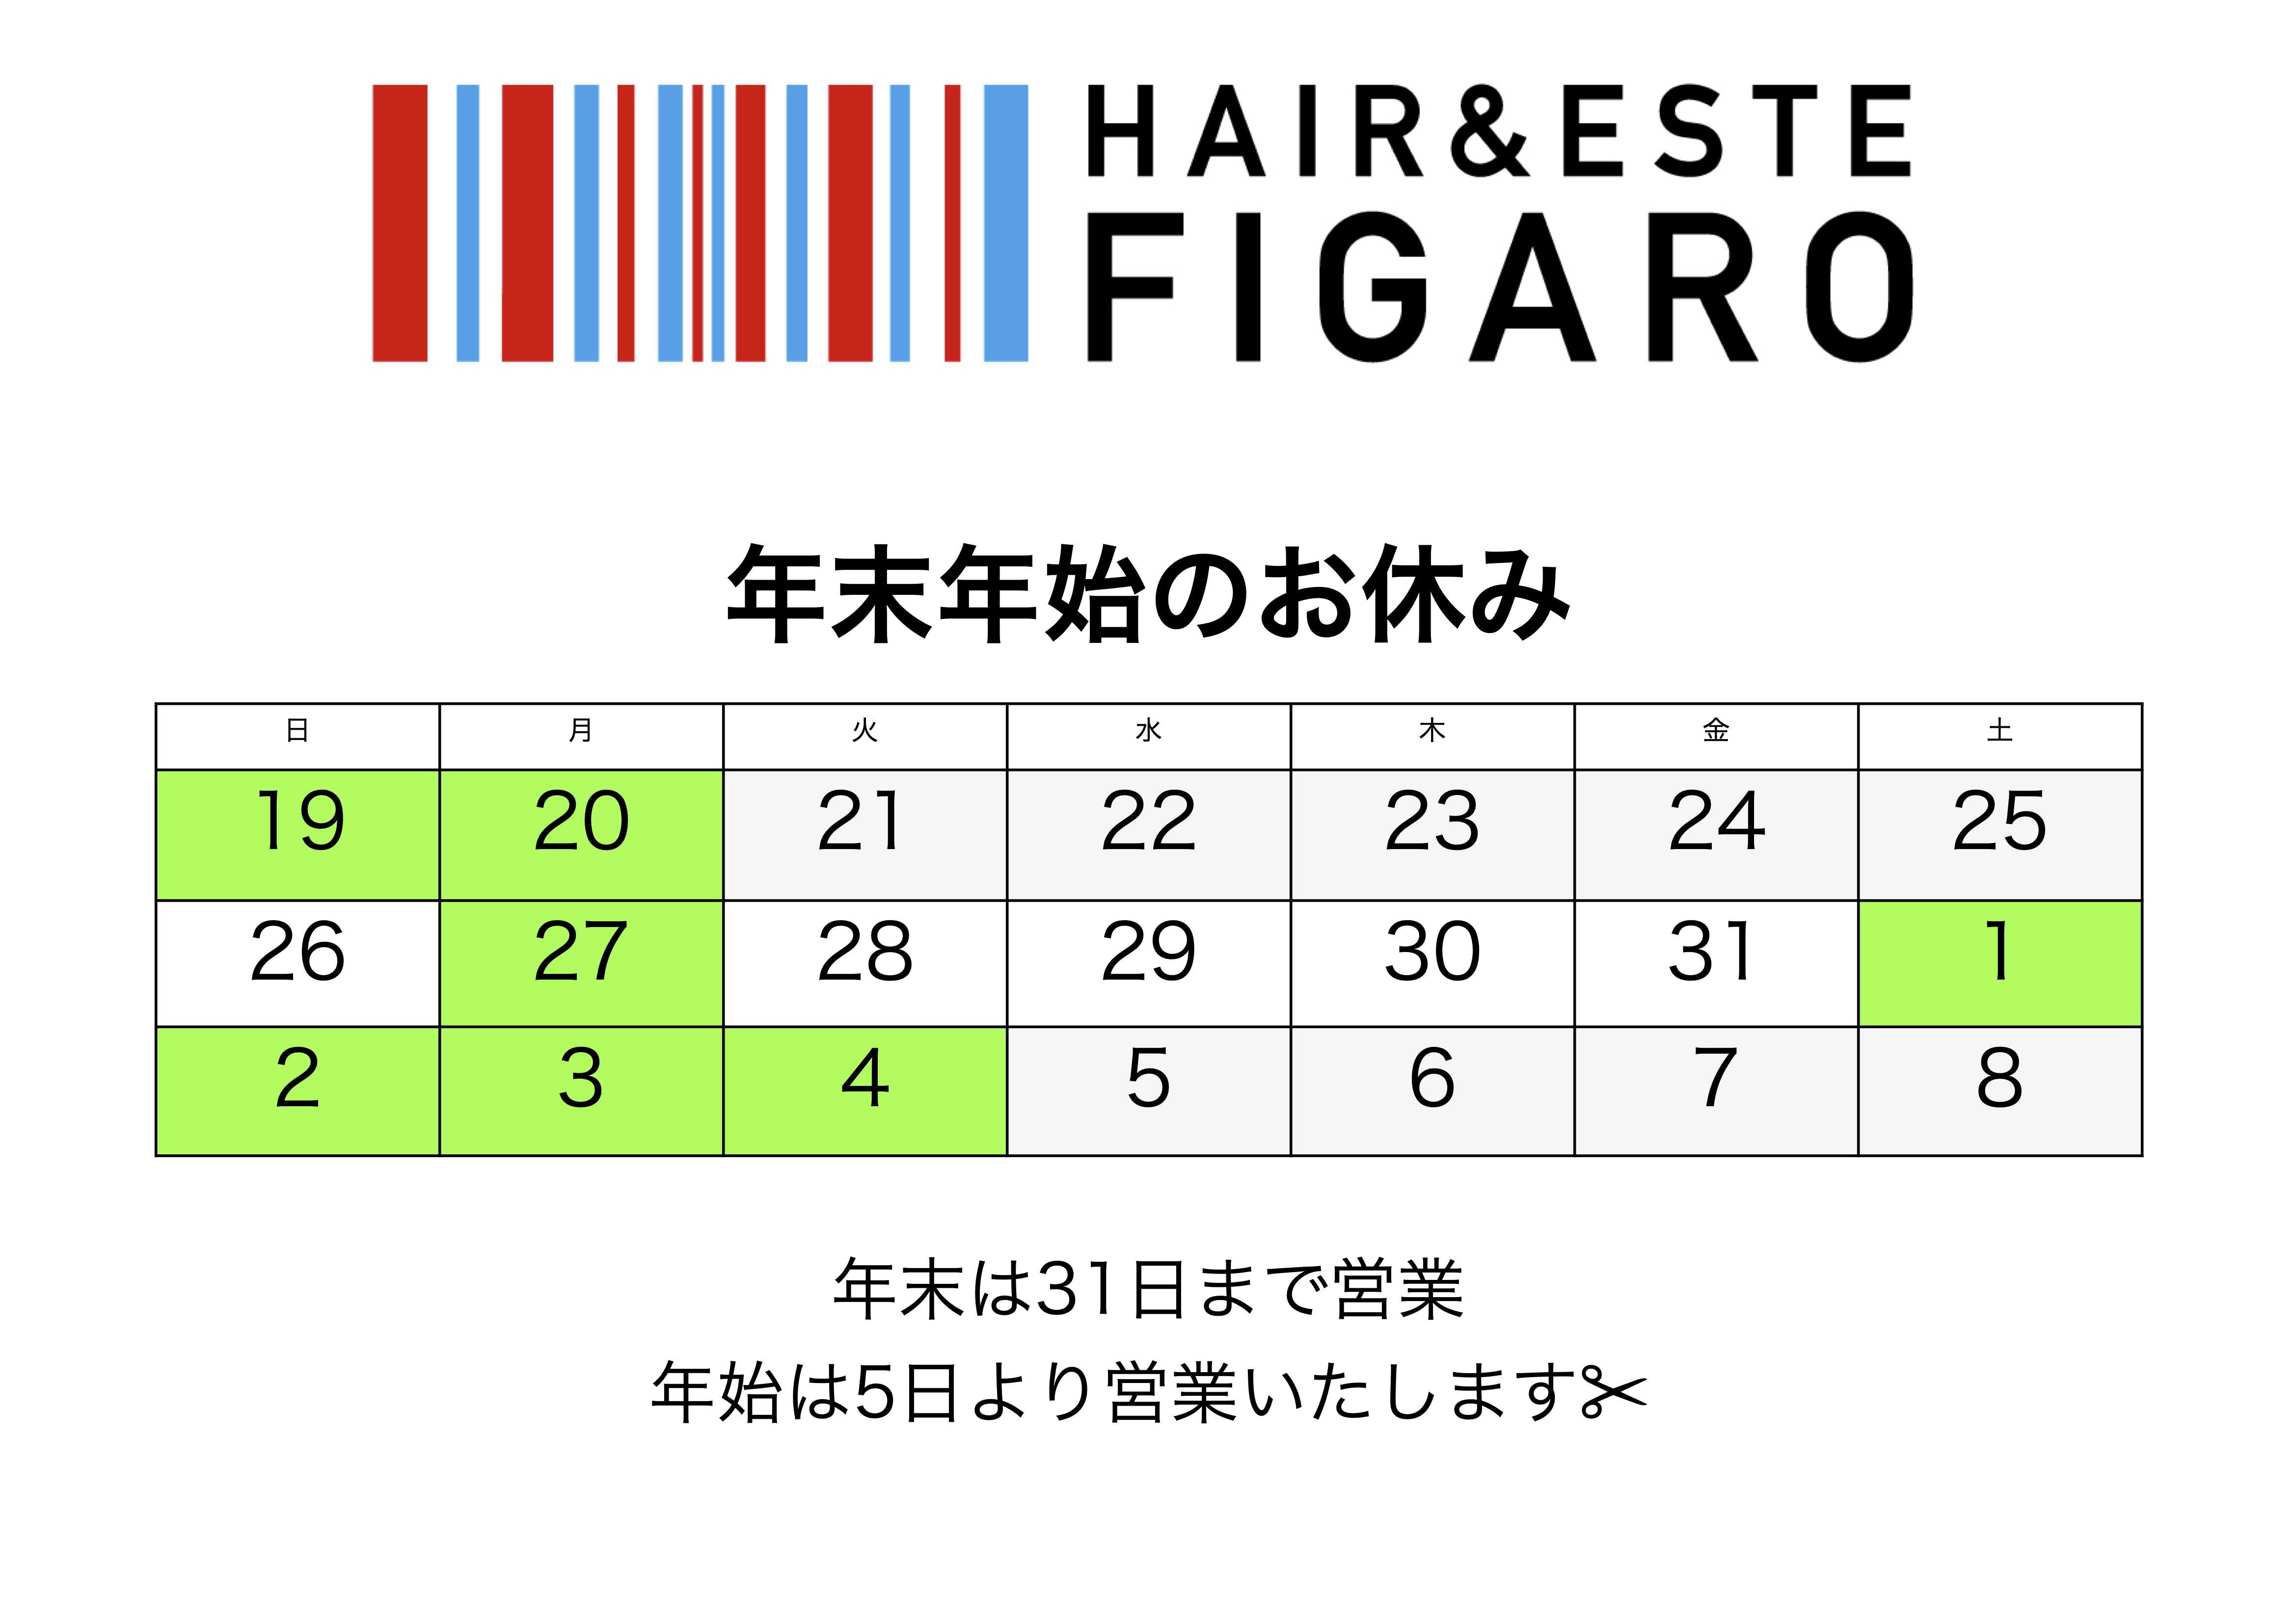 http://figaro-hair.com/blog/%EF%BC%92%EF%BC%90%EF%BC%92%EF%BC%91%E5%B9%B4%E6%9C%AB%E5%B9%B4%E5%A7%8B.jpg